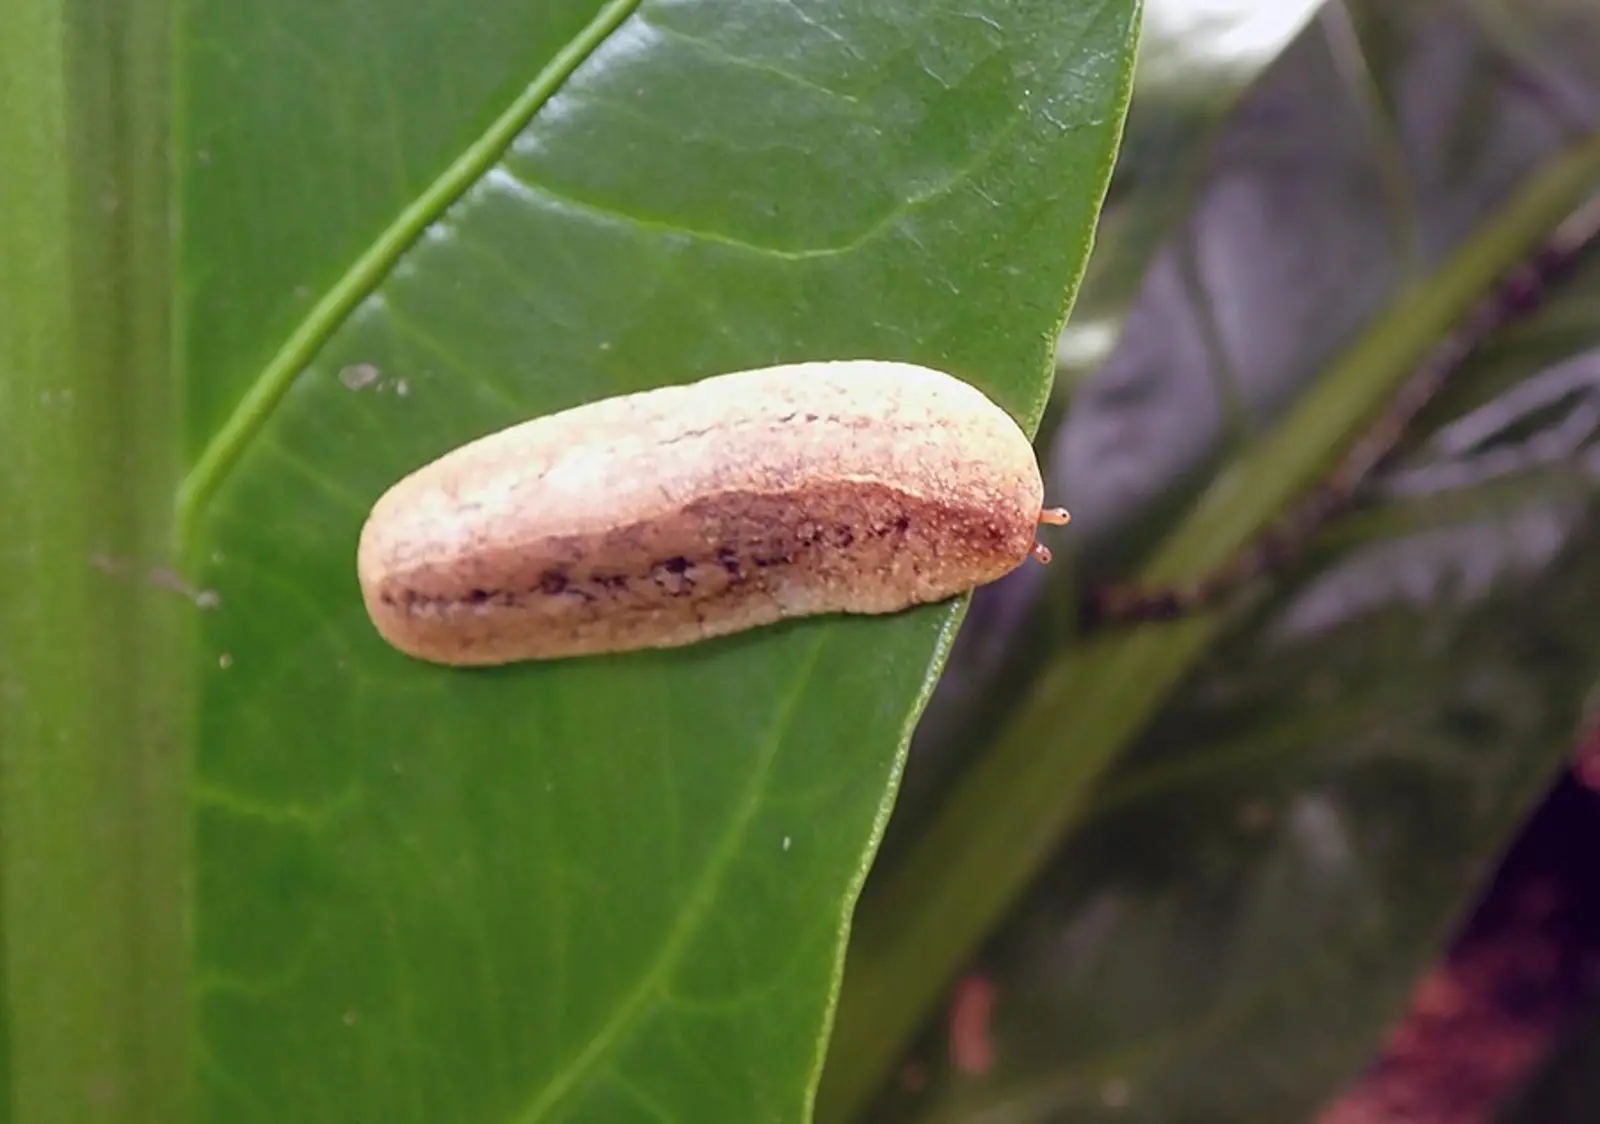 A close-up view of a light brown slug on a leaf.